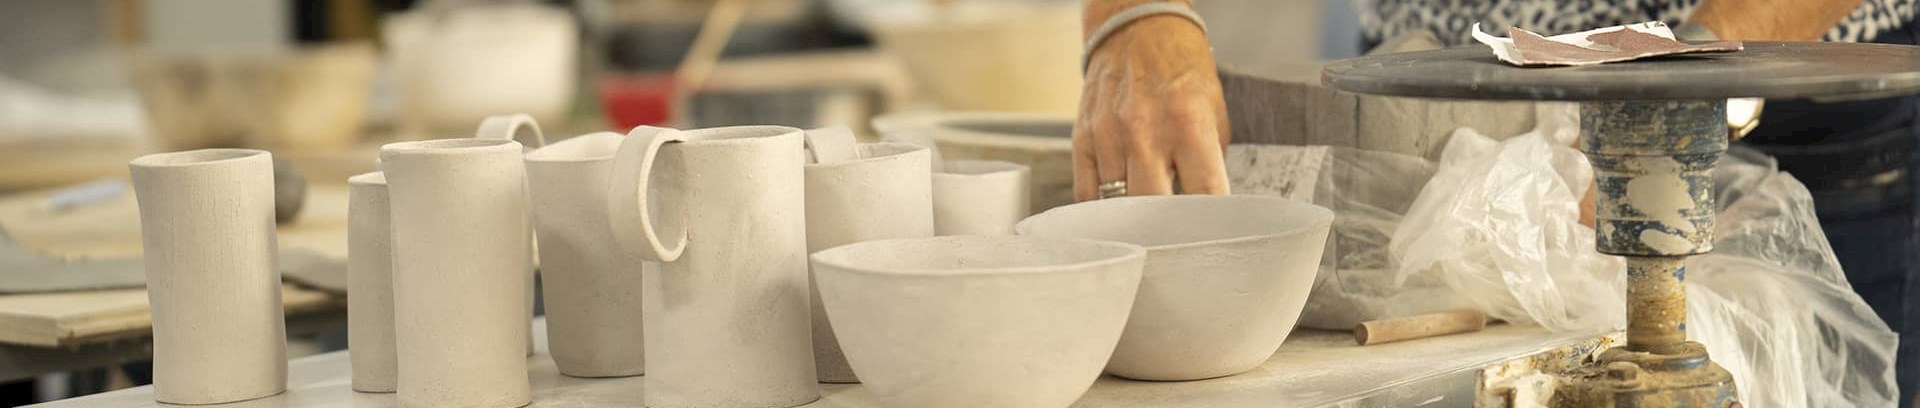 Kander og skåle i ler, keramik, kursus i FOF Aarhus